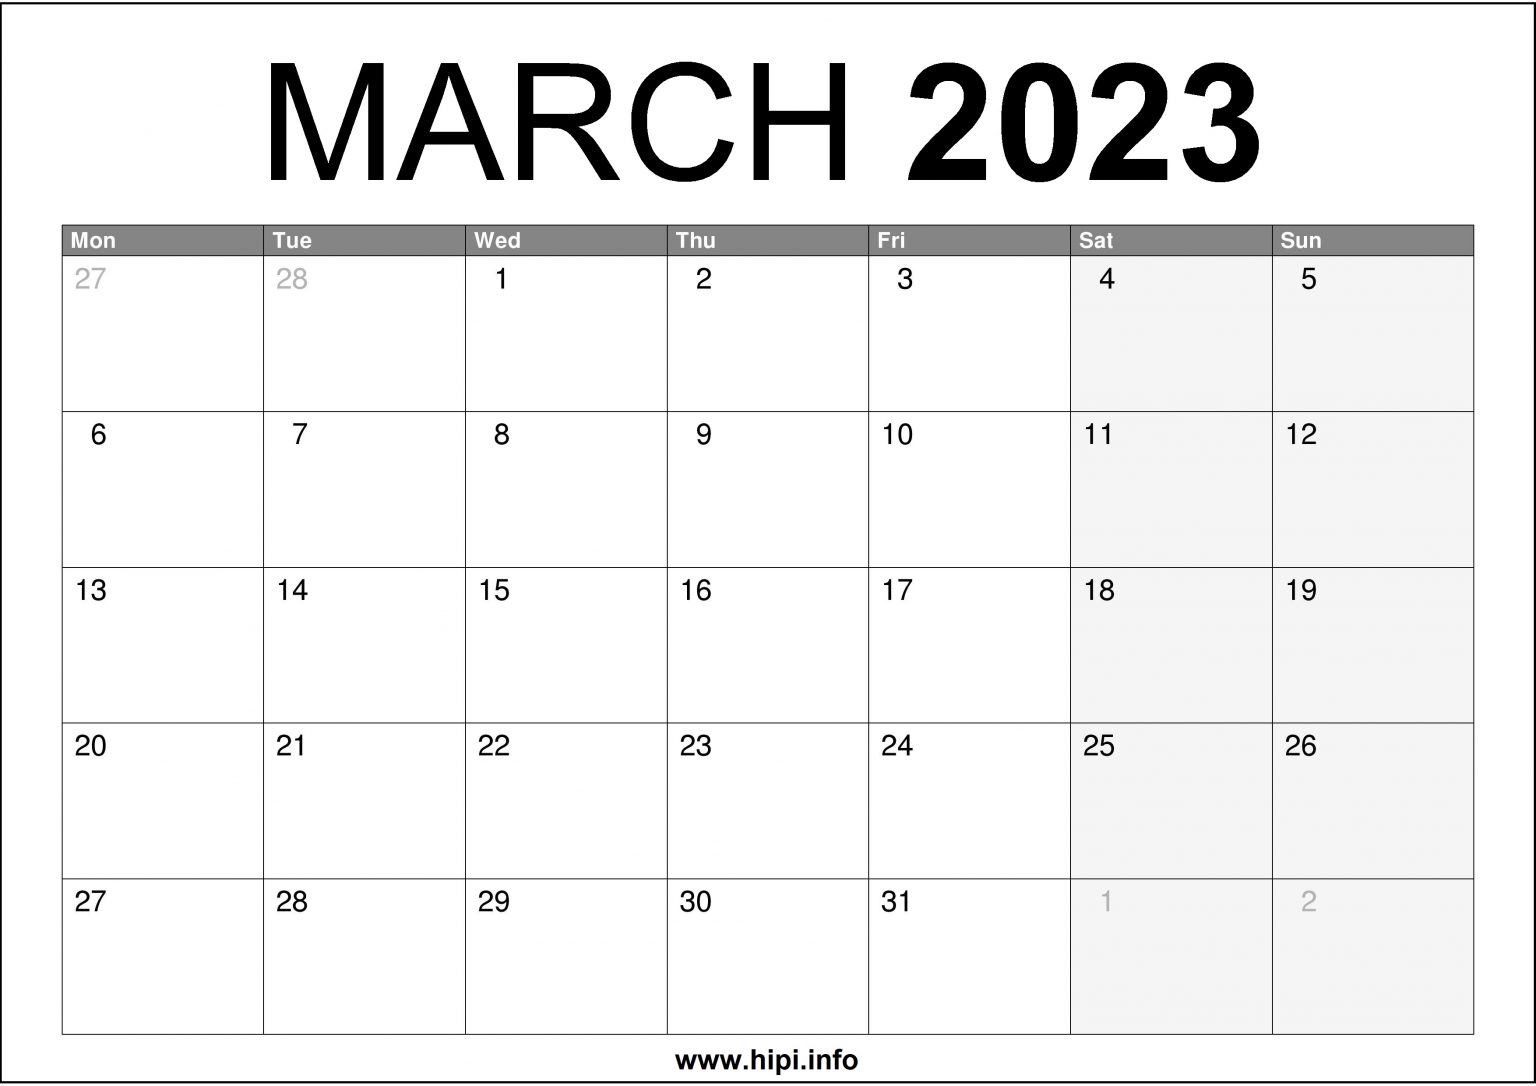 march-2023-uk-calendar-printable-hd-hipi-info